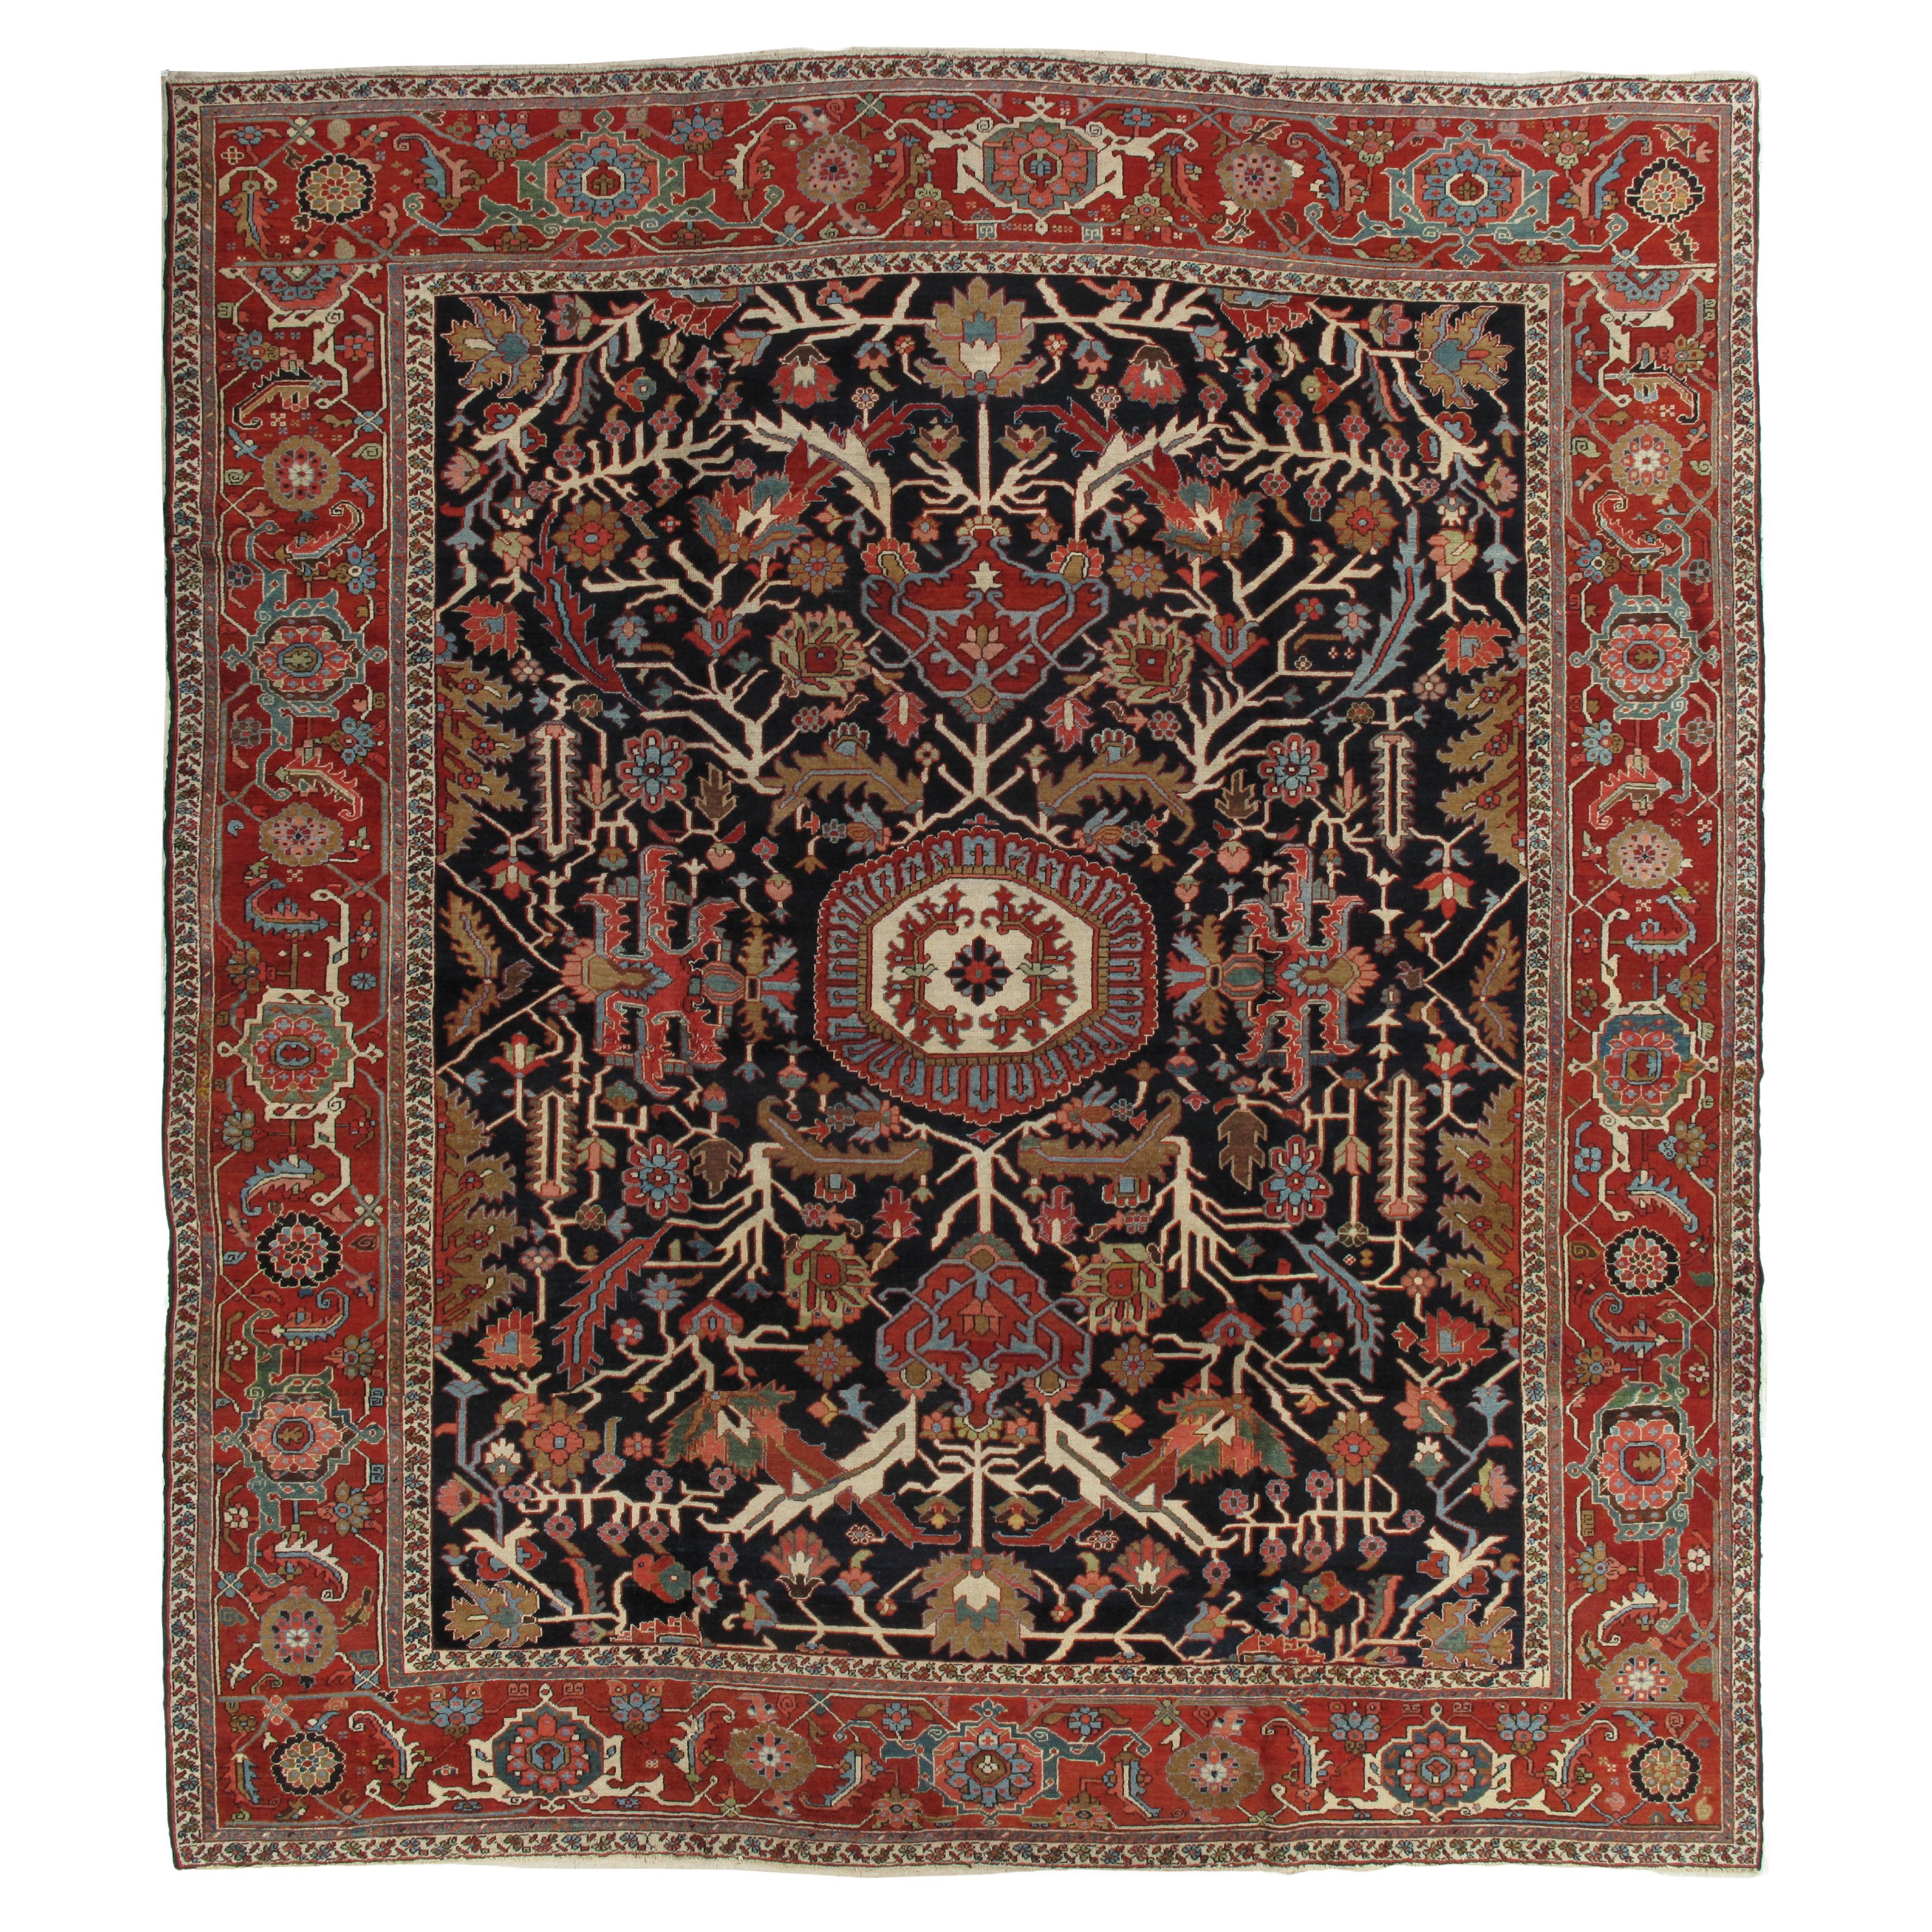 Antique Persian Heriz Carpet Handmade Wool Oriental Rug, Rust, Navy For Sale